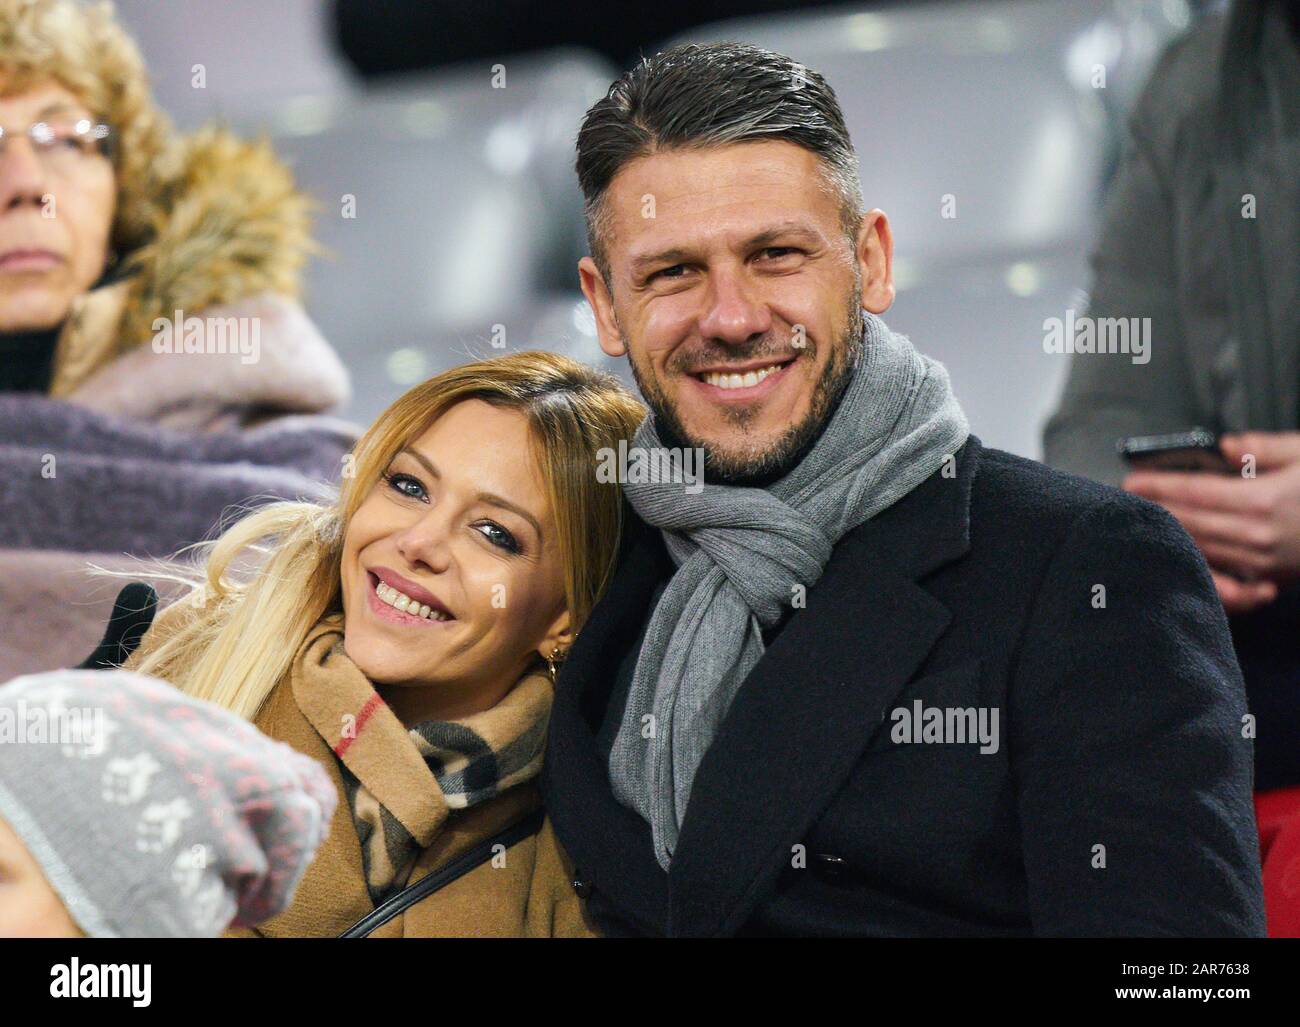 Football Munich-Schalke , Munich, Jan 25, 2020. Martin DEMICHELIS, former FCB player with wife Evangelina Anderson FC BAYERN MUNICH - FC SCHALKE 04 5-0  - DFL REGULATIONS PROHIBIT ANY USE OF PHOTOGRAPHS as IMAGE SEQUENCES and/or QUASI-VIDEO -  1.German Soccer League , Munich, January 25, 2020.  Season 2019/2020, matchday 19, © Peter Schatz / Alamy Live News Stock Photo